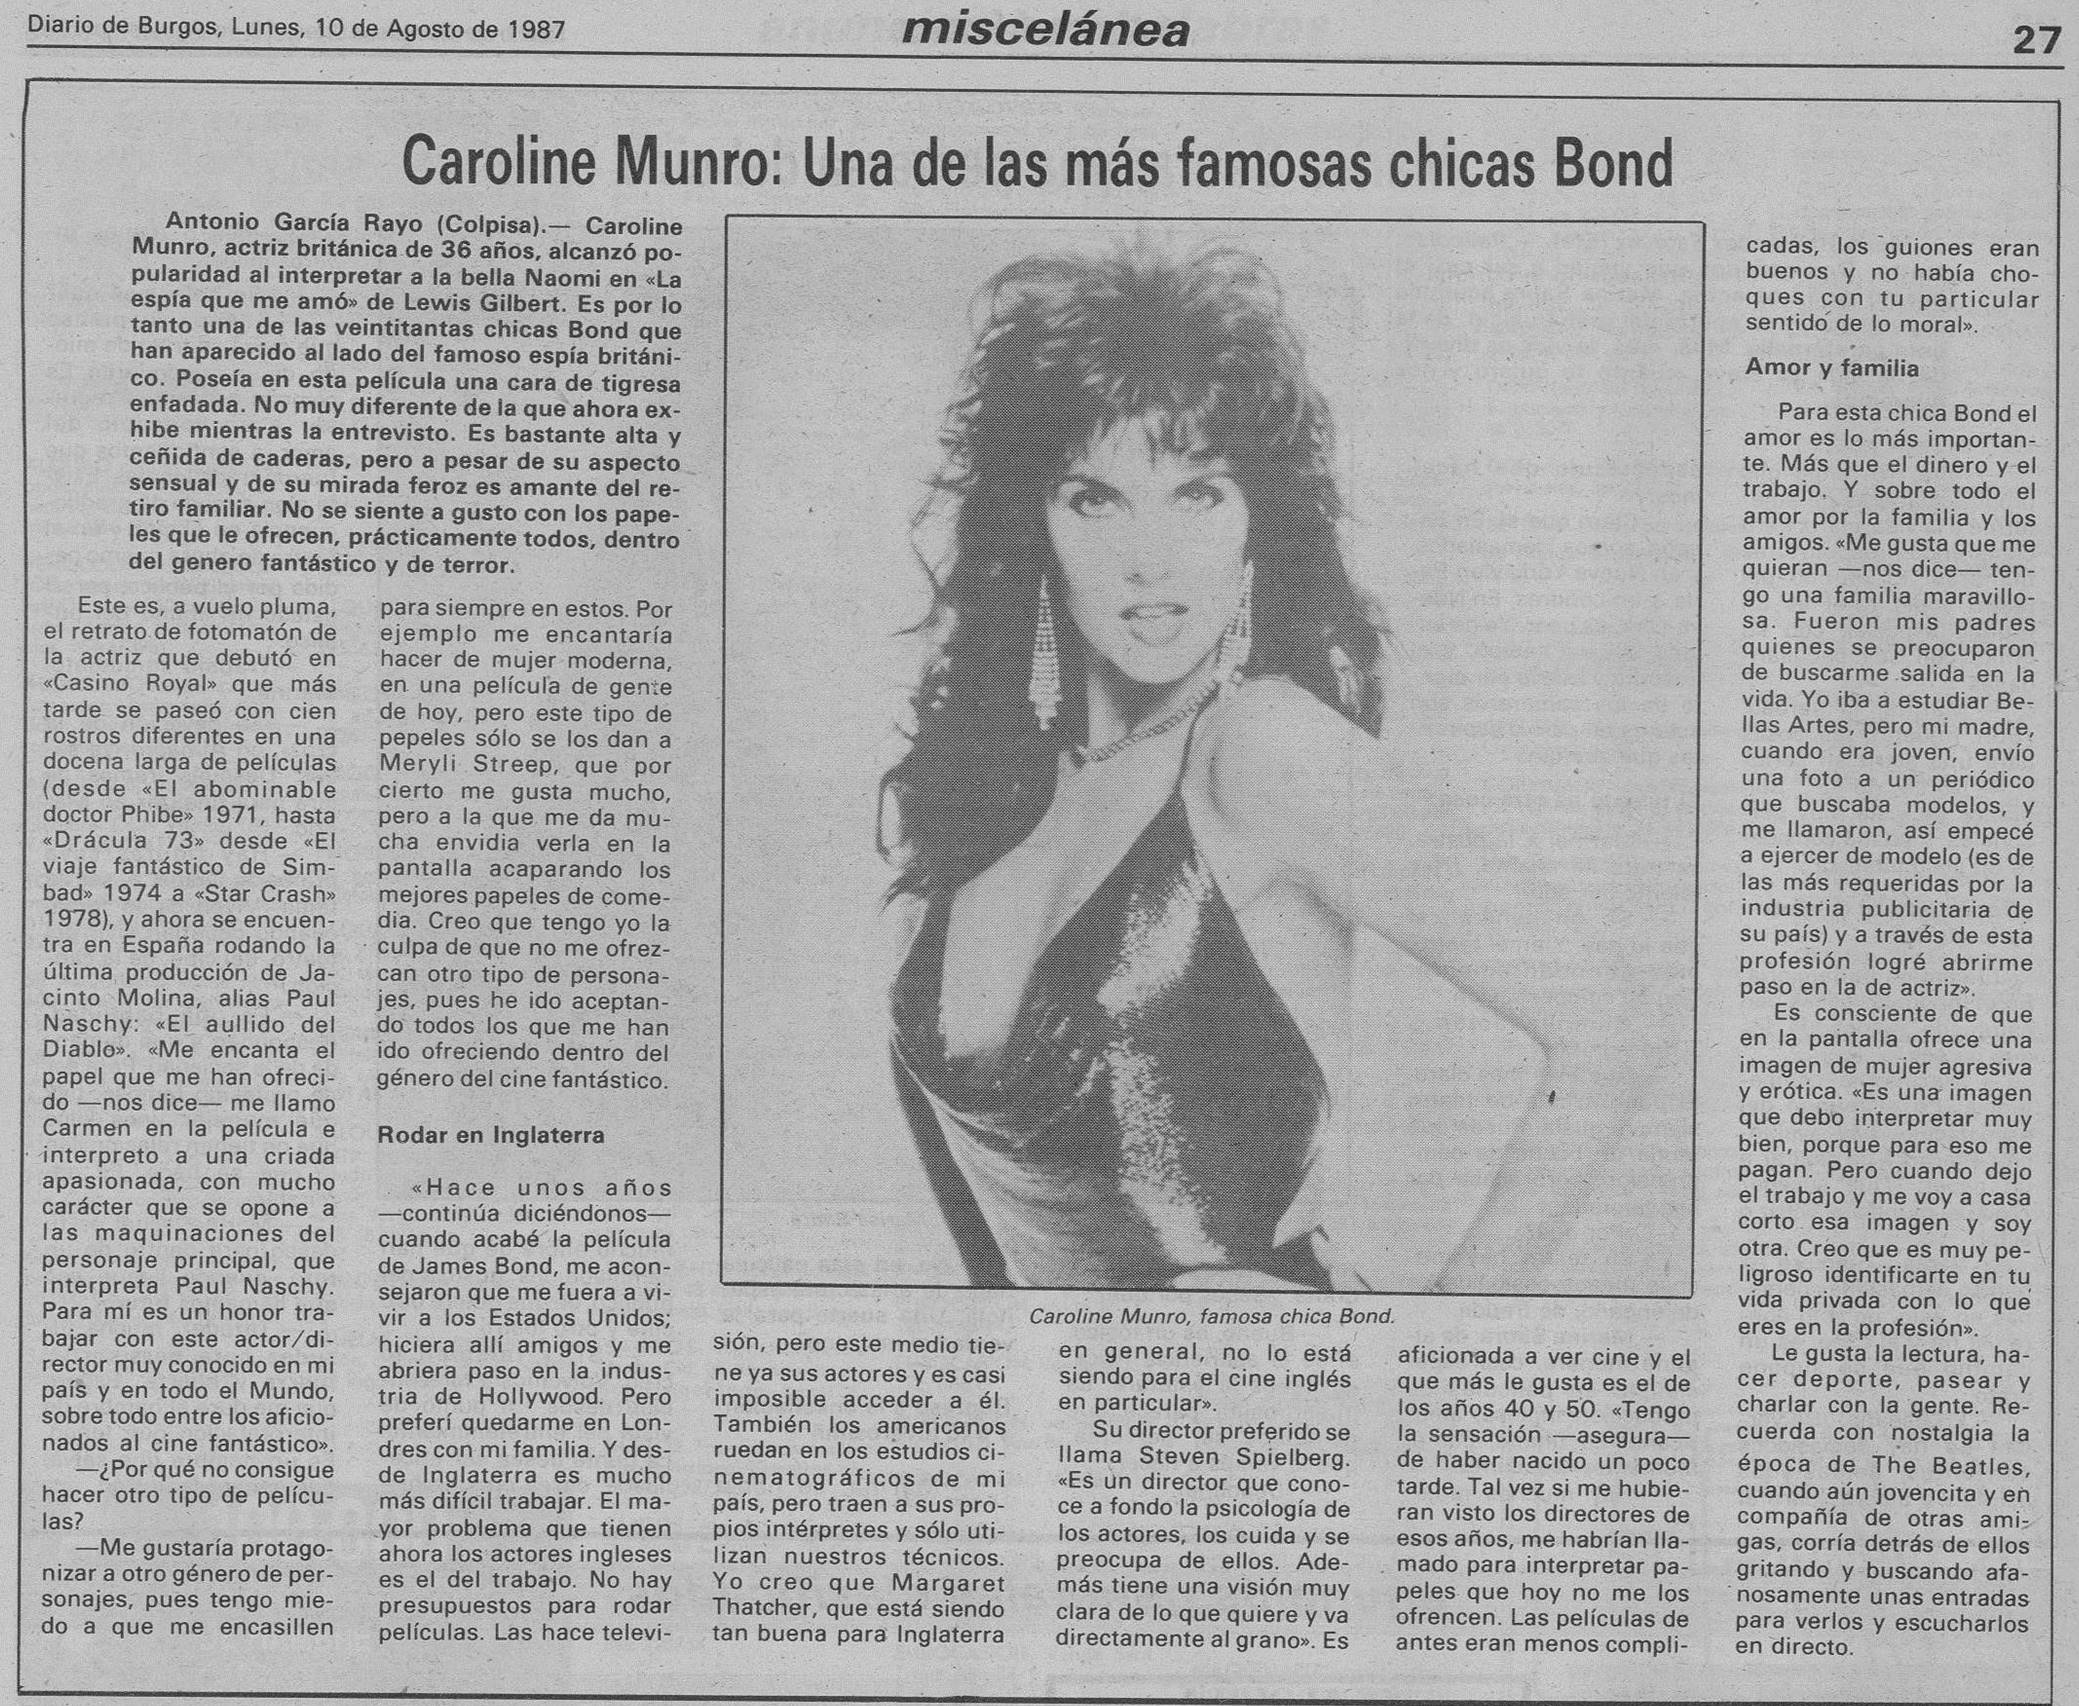 10 1987 08 10 Diario de Burgos Caroline Munro